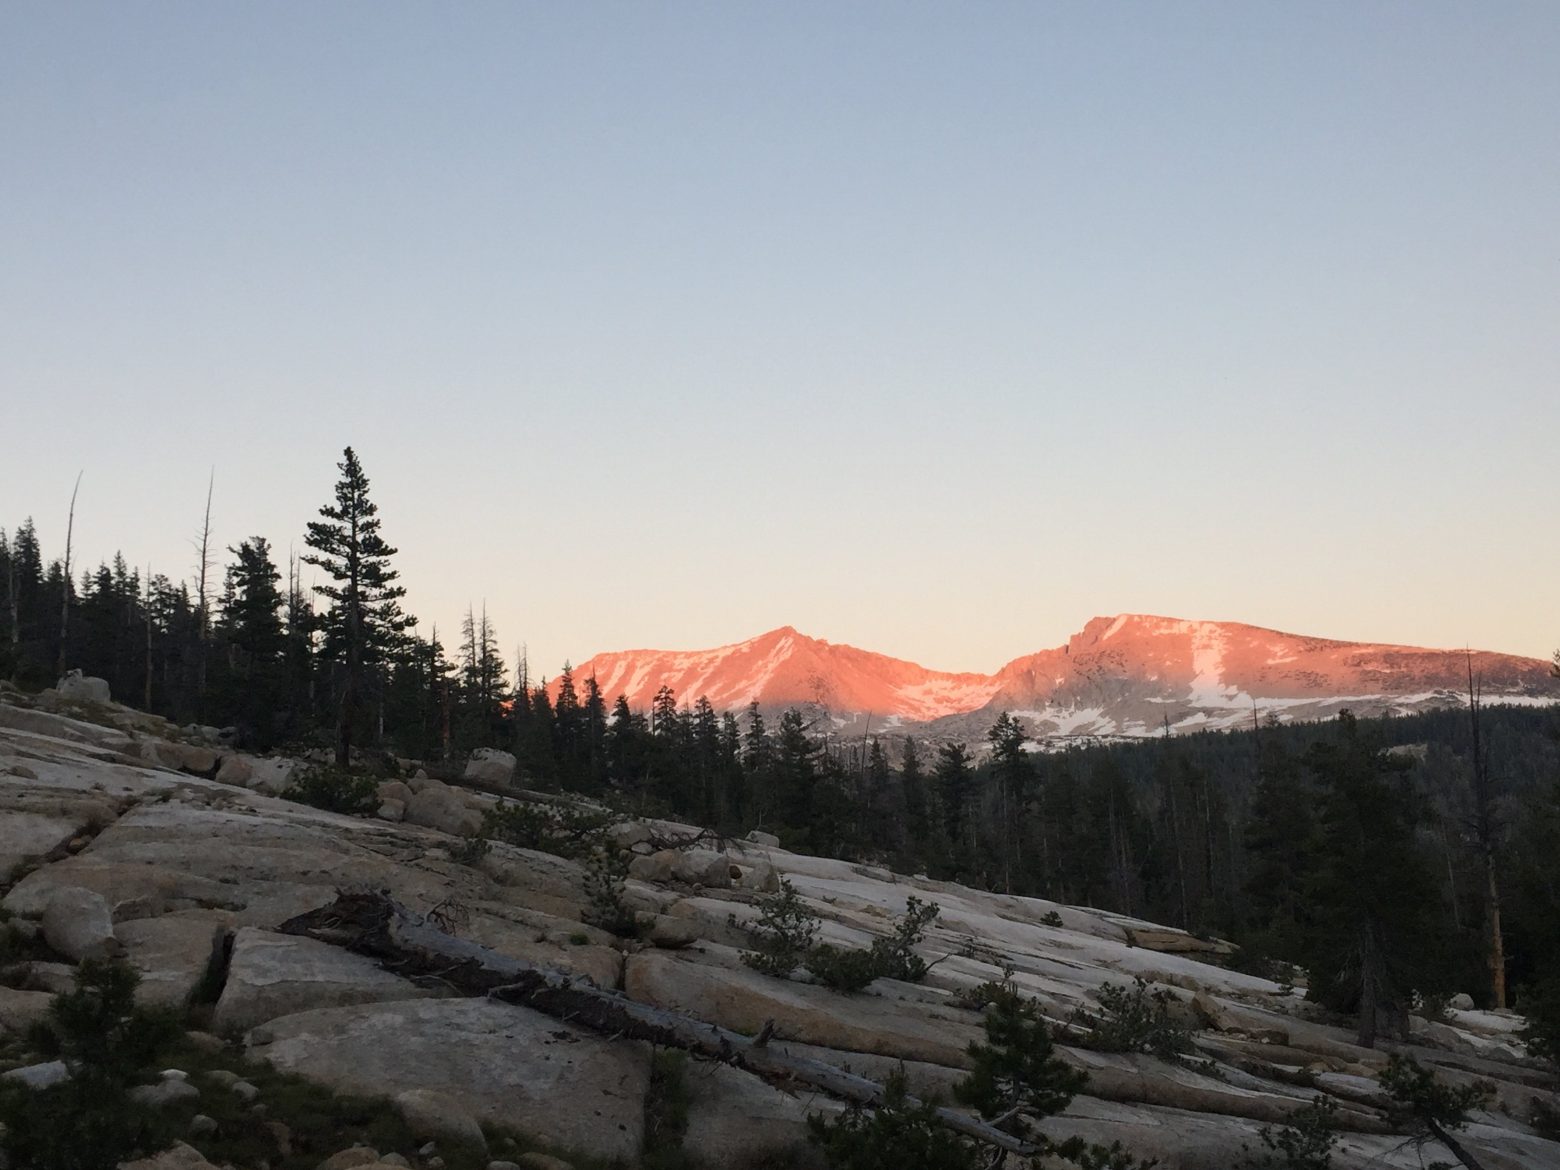 Sunset in the Sierra